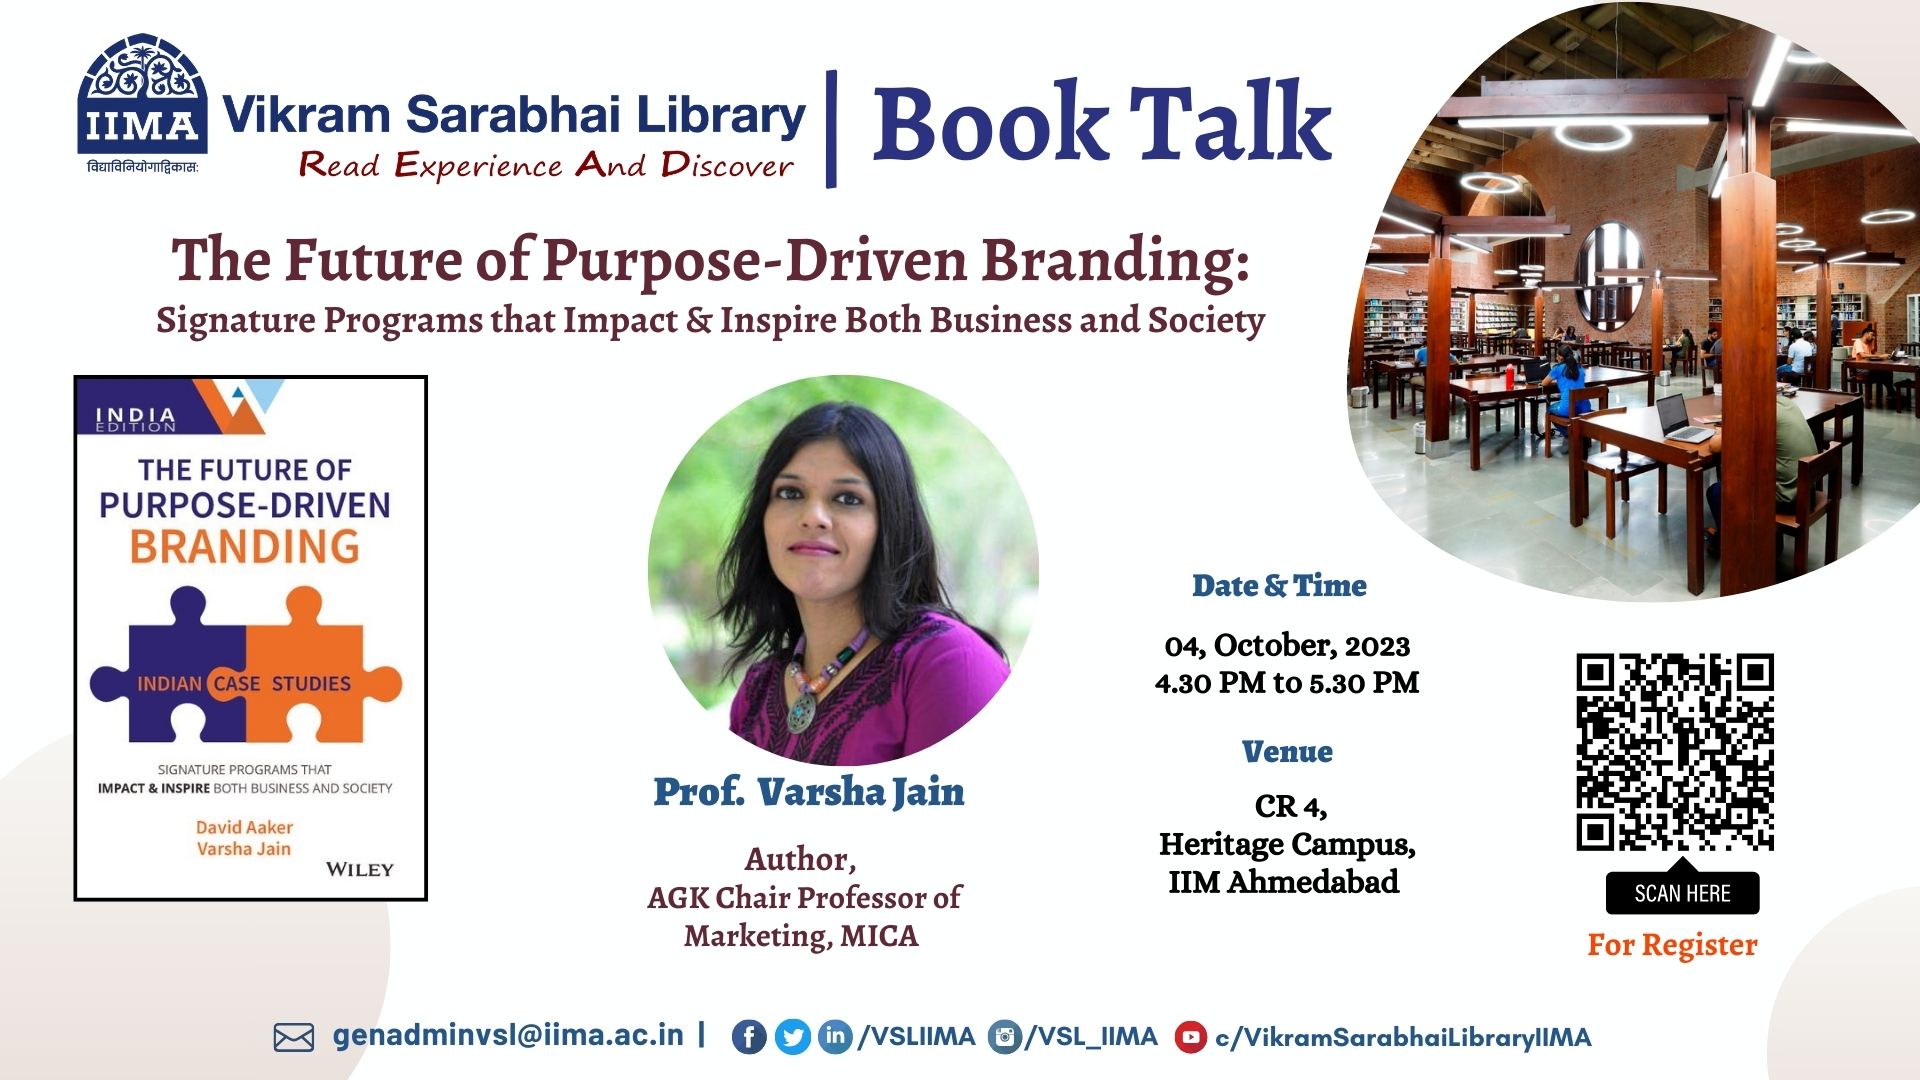 A Book Talk by Prof. Varsha Jain